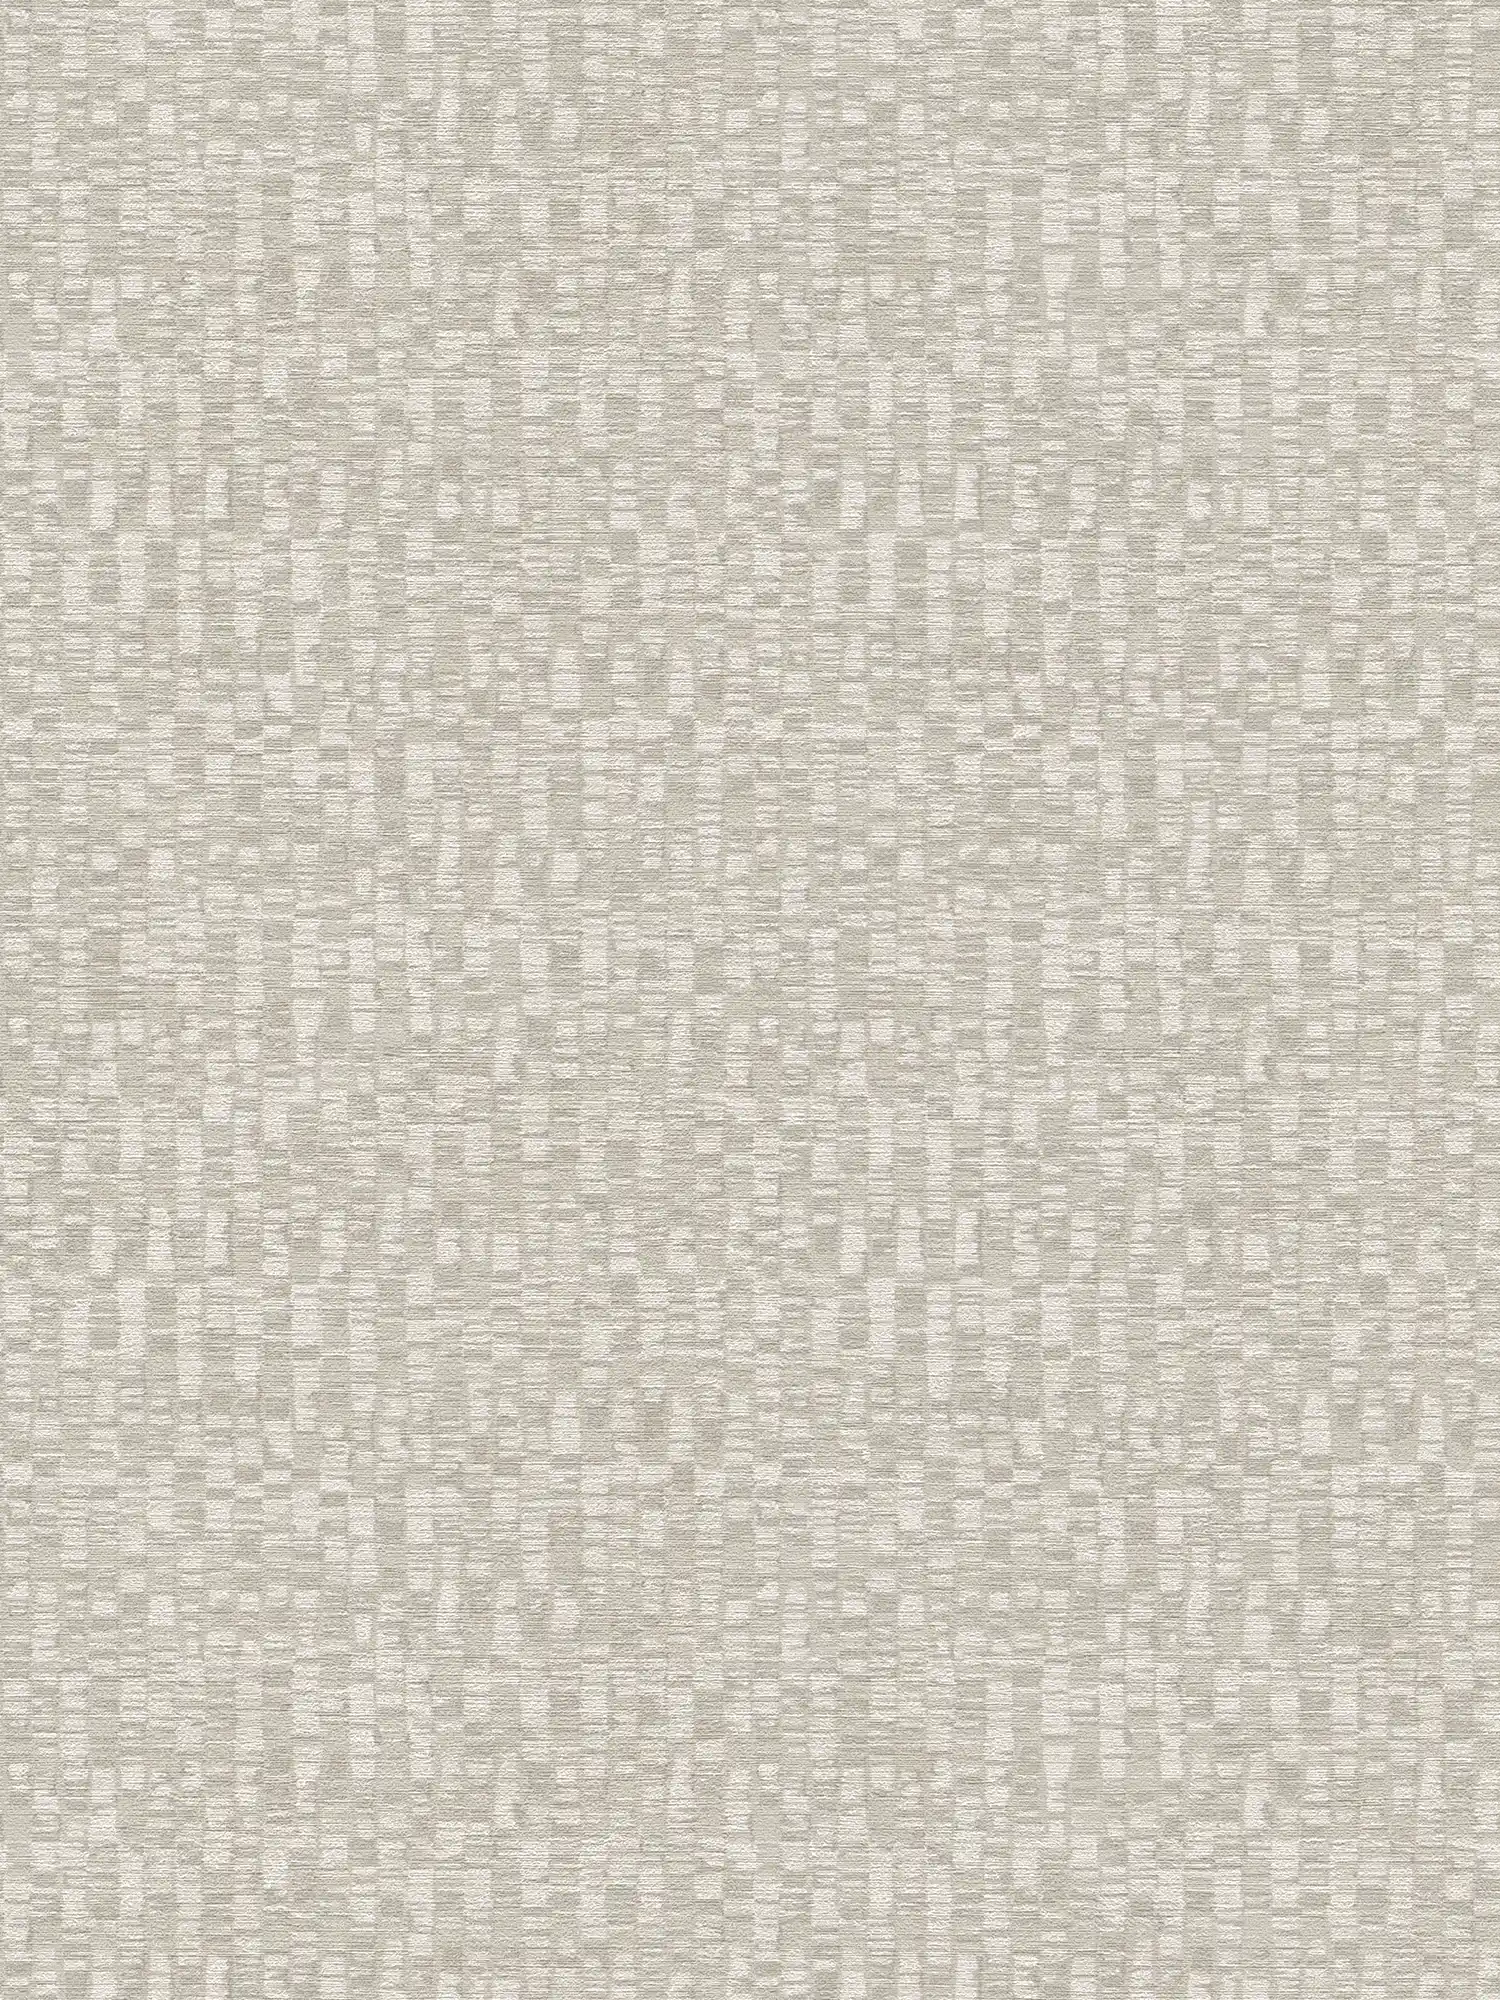 Non-woven wallpaper in plain look - grey, white
